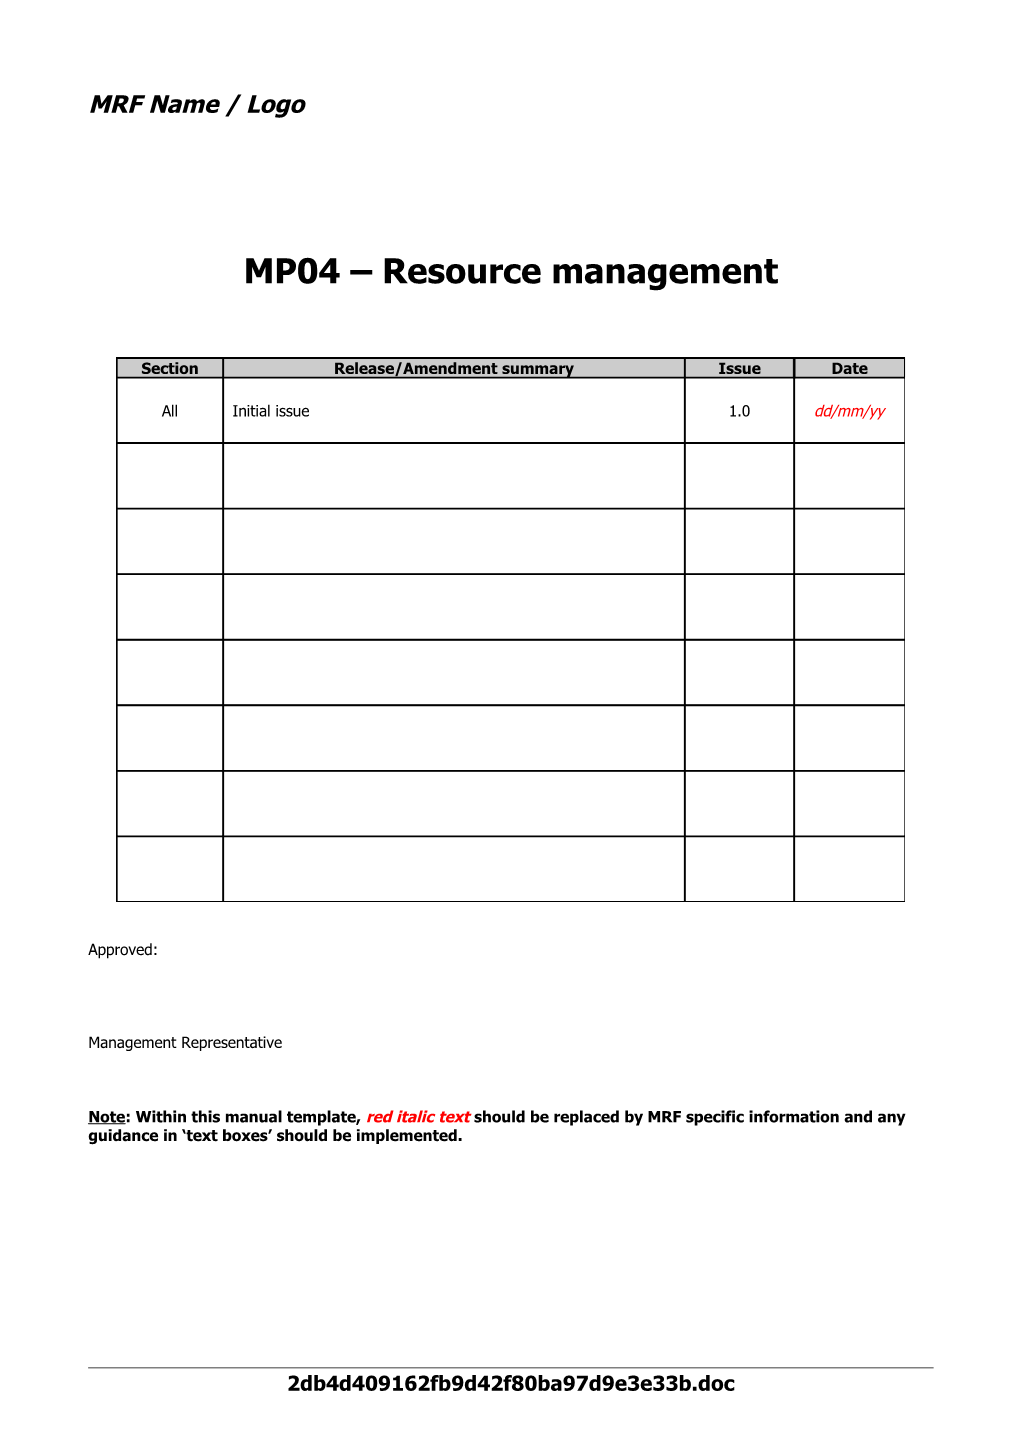 MP04 Resource Management